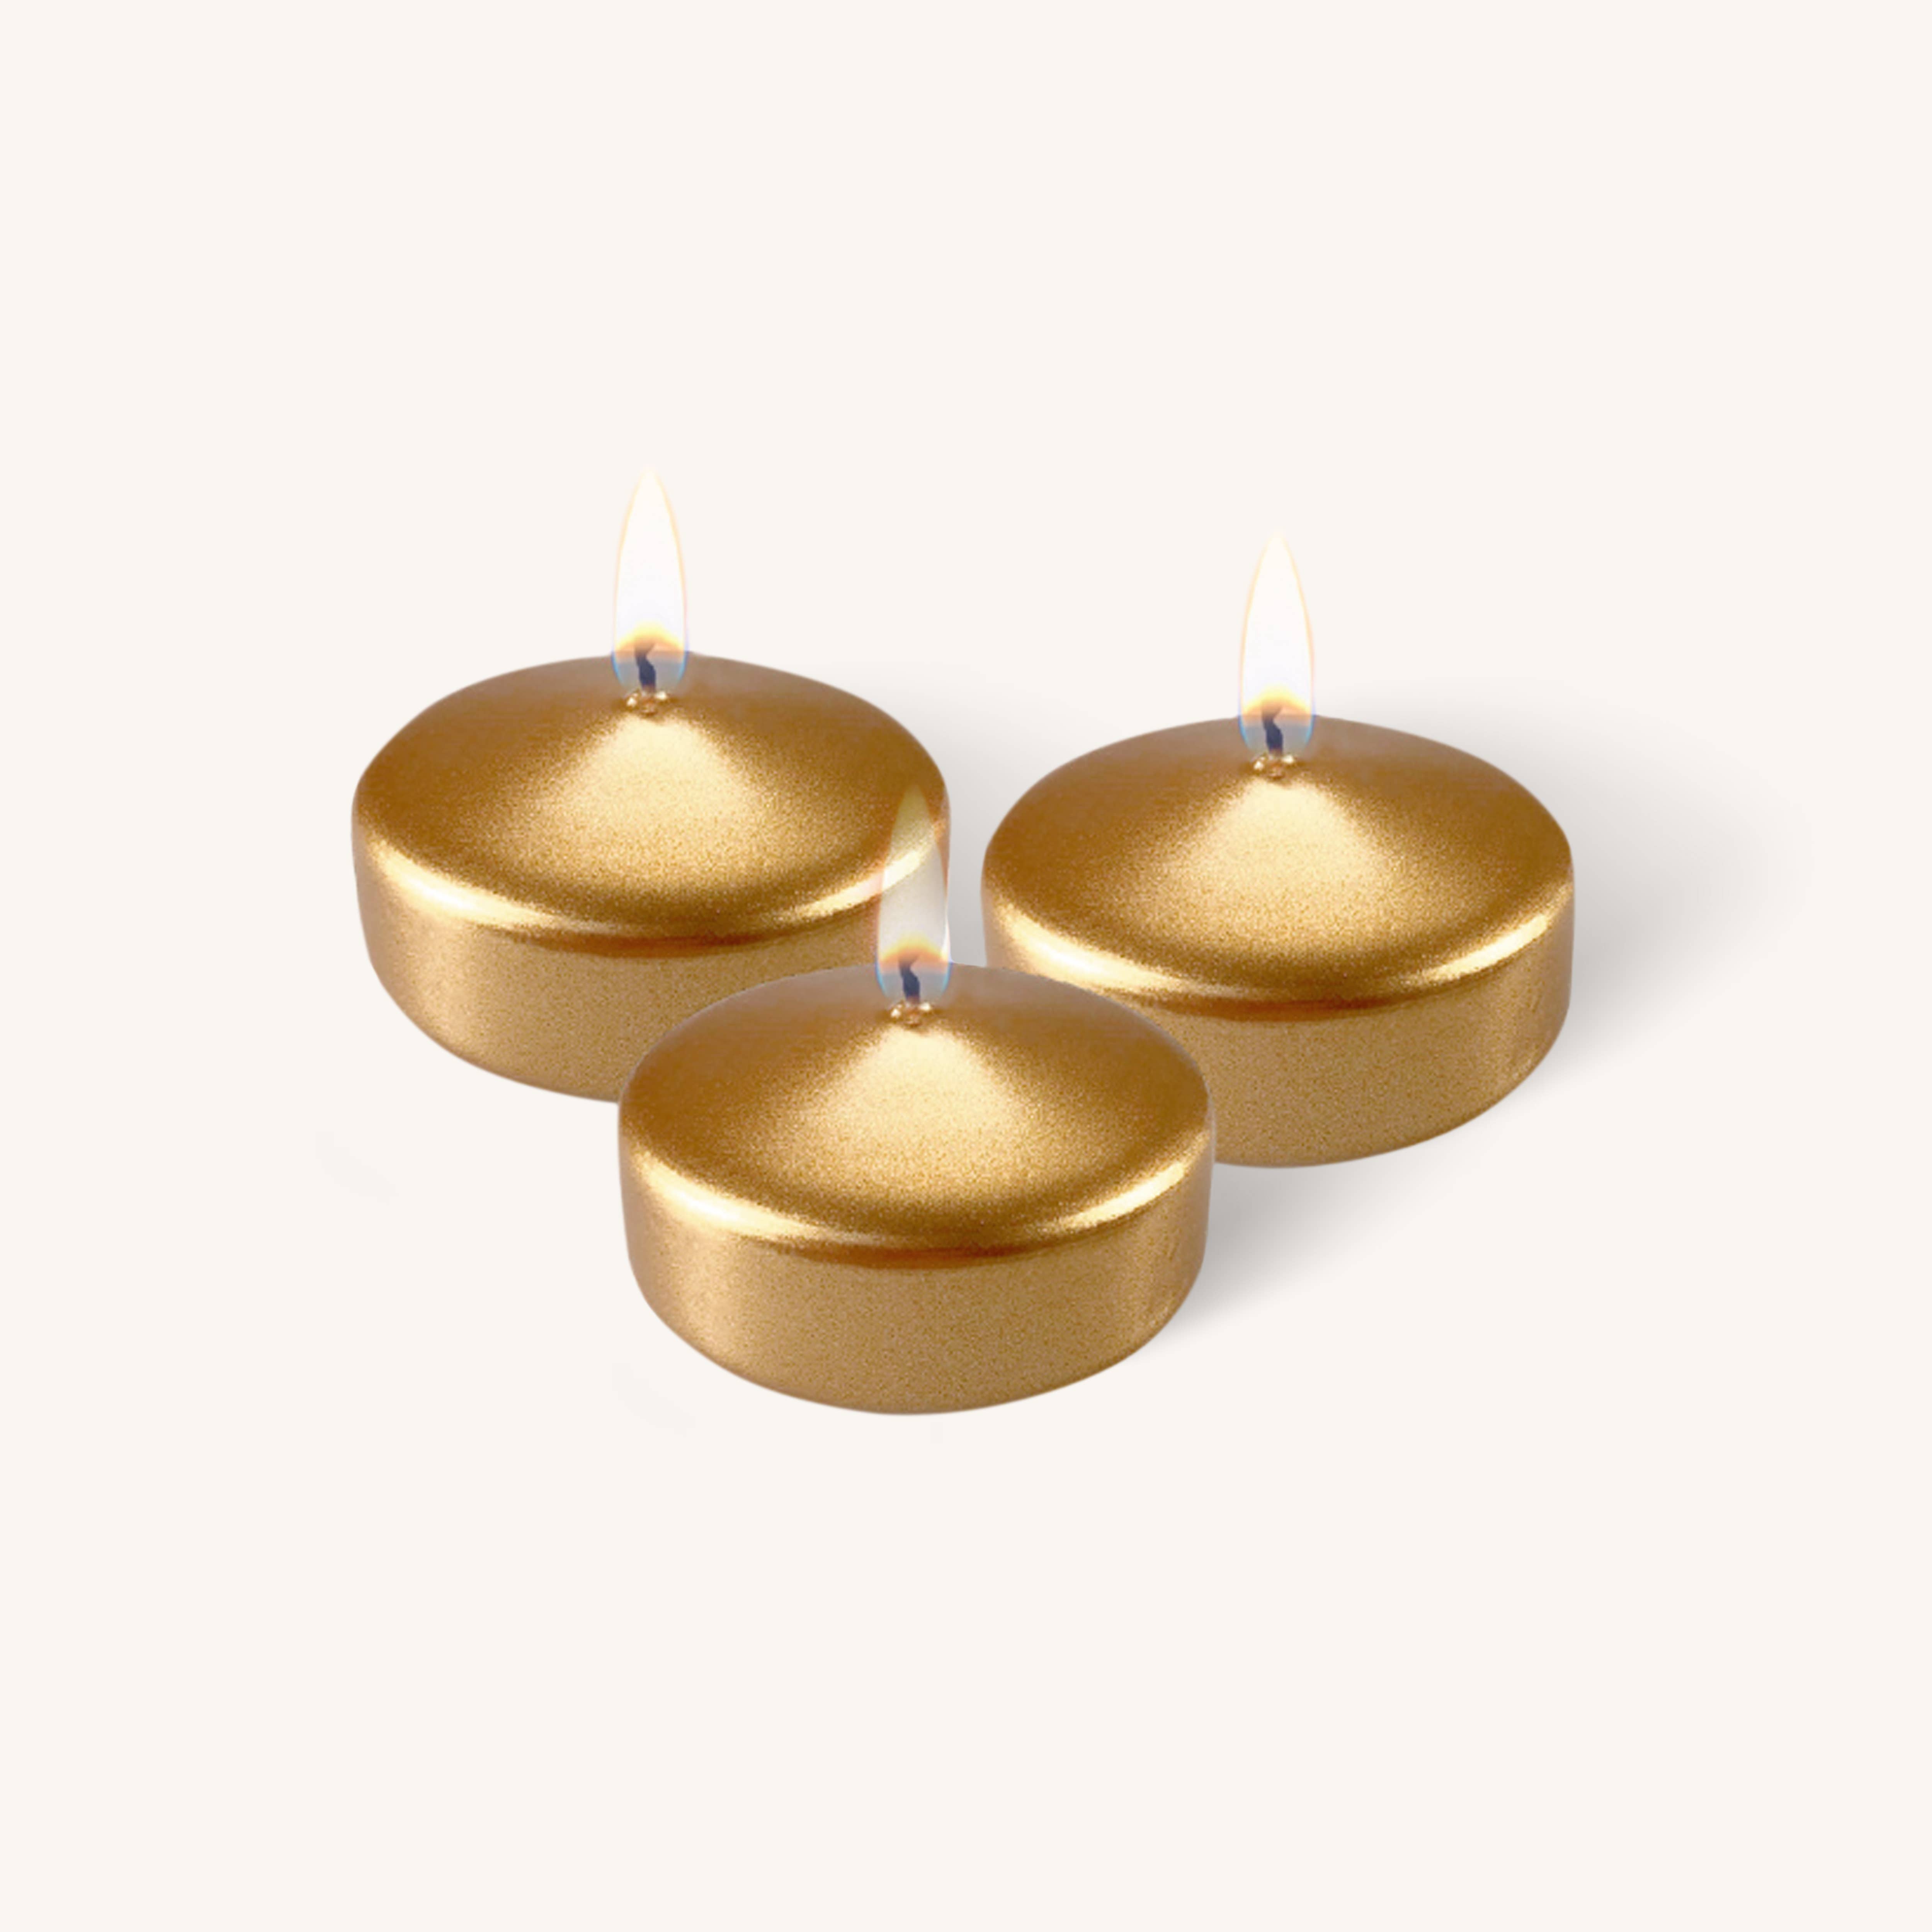 Floating Candles - Metallic Antique Gold - Medium - 10 Pack